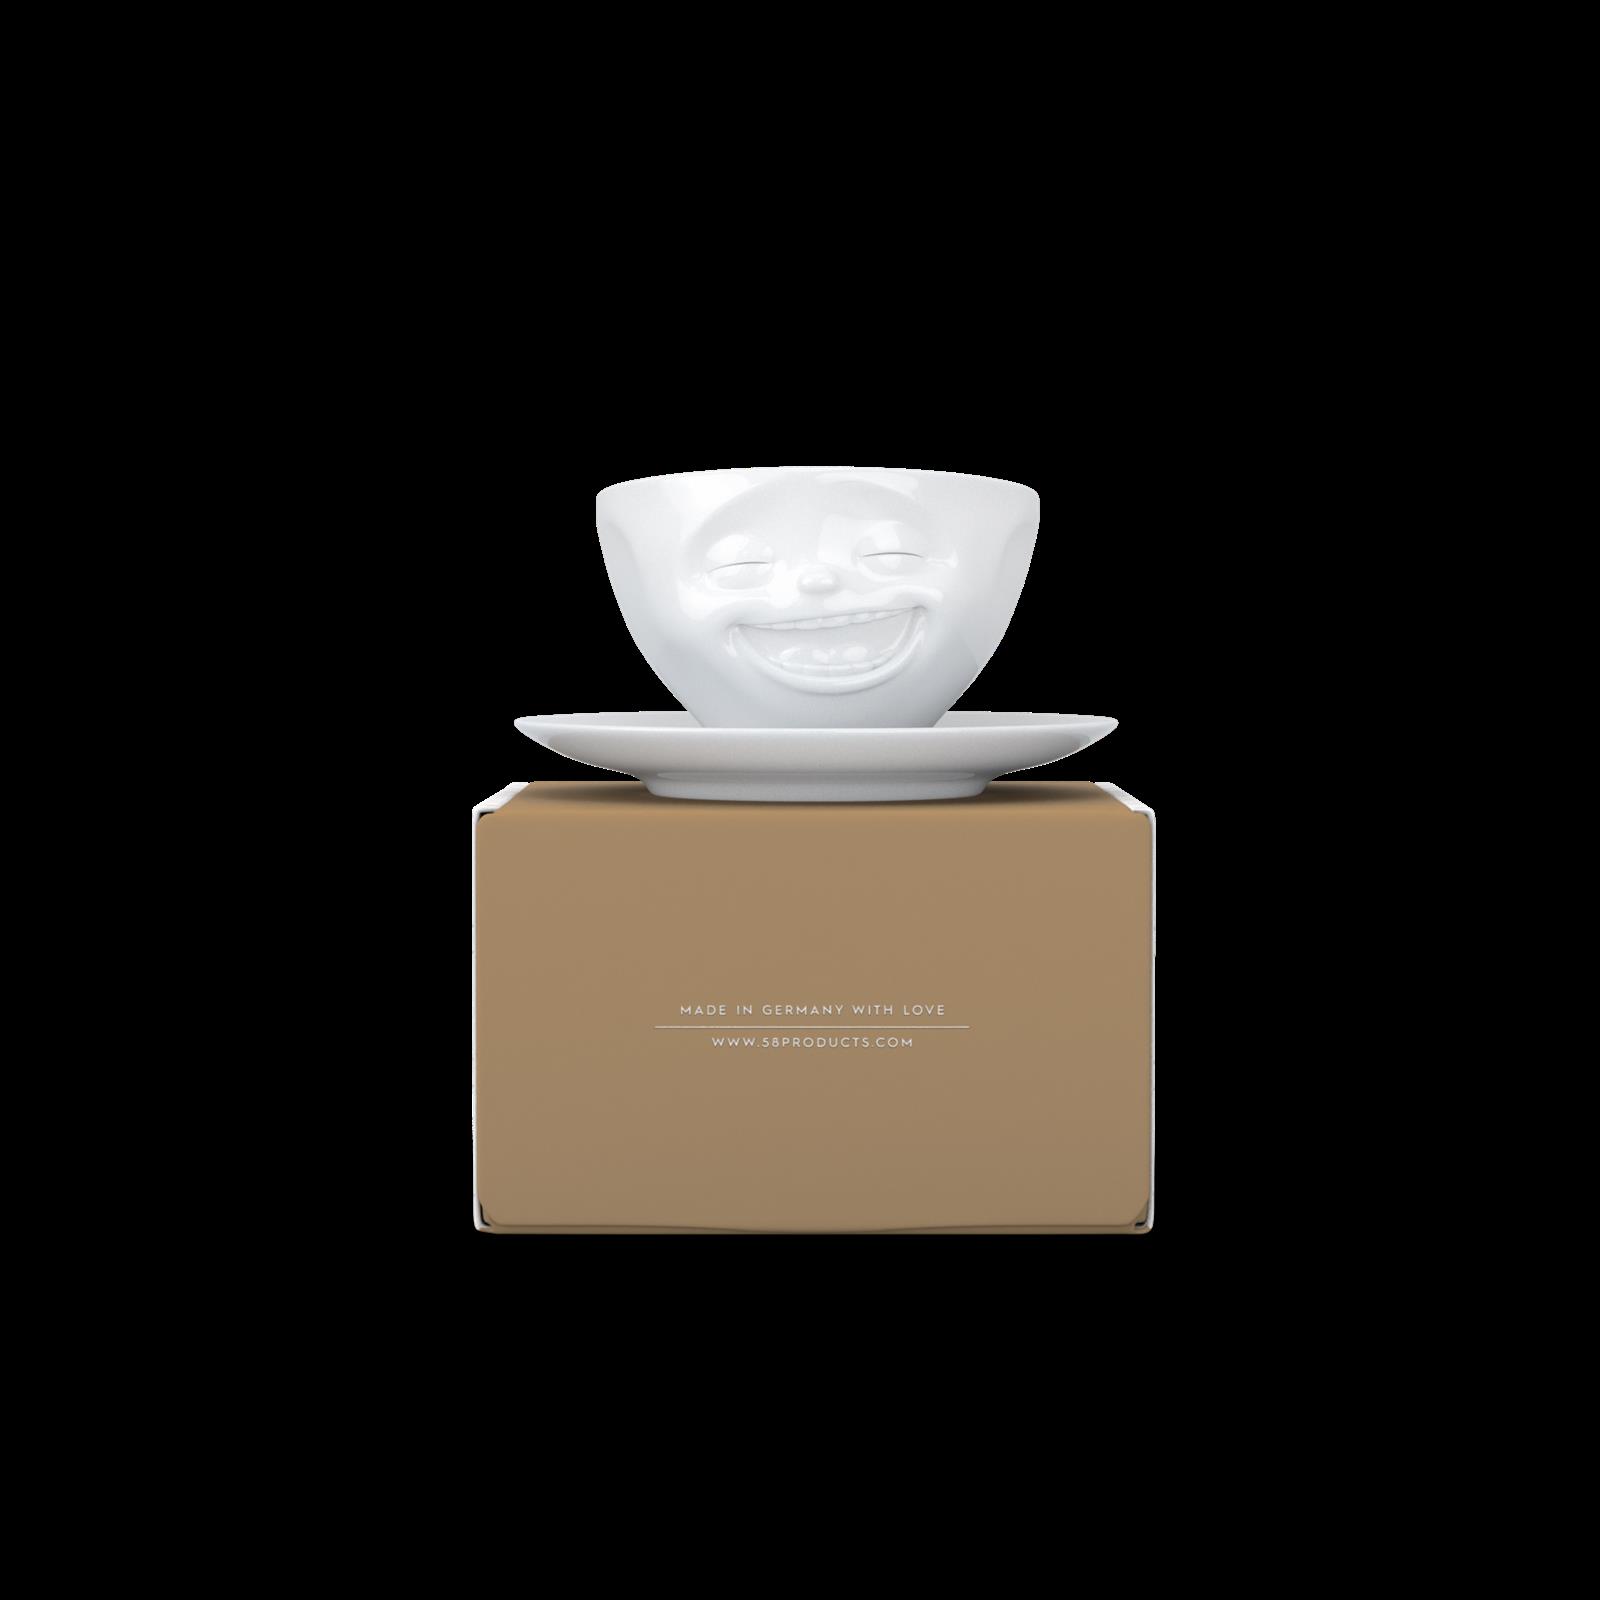 Fiftyeight Products KaffeeTasse - lachend weiß